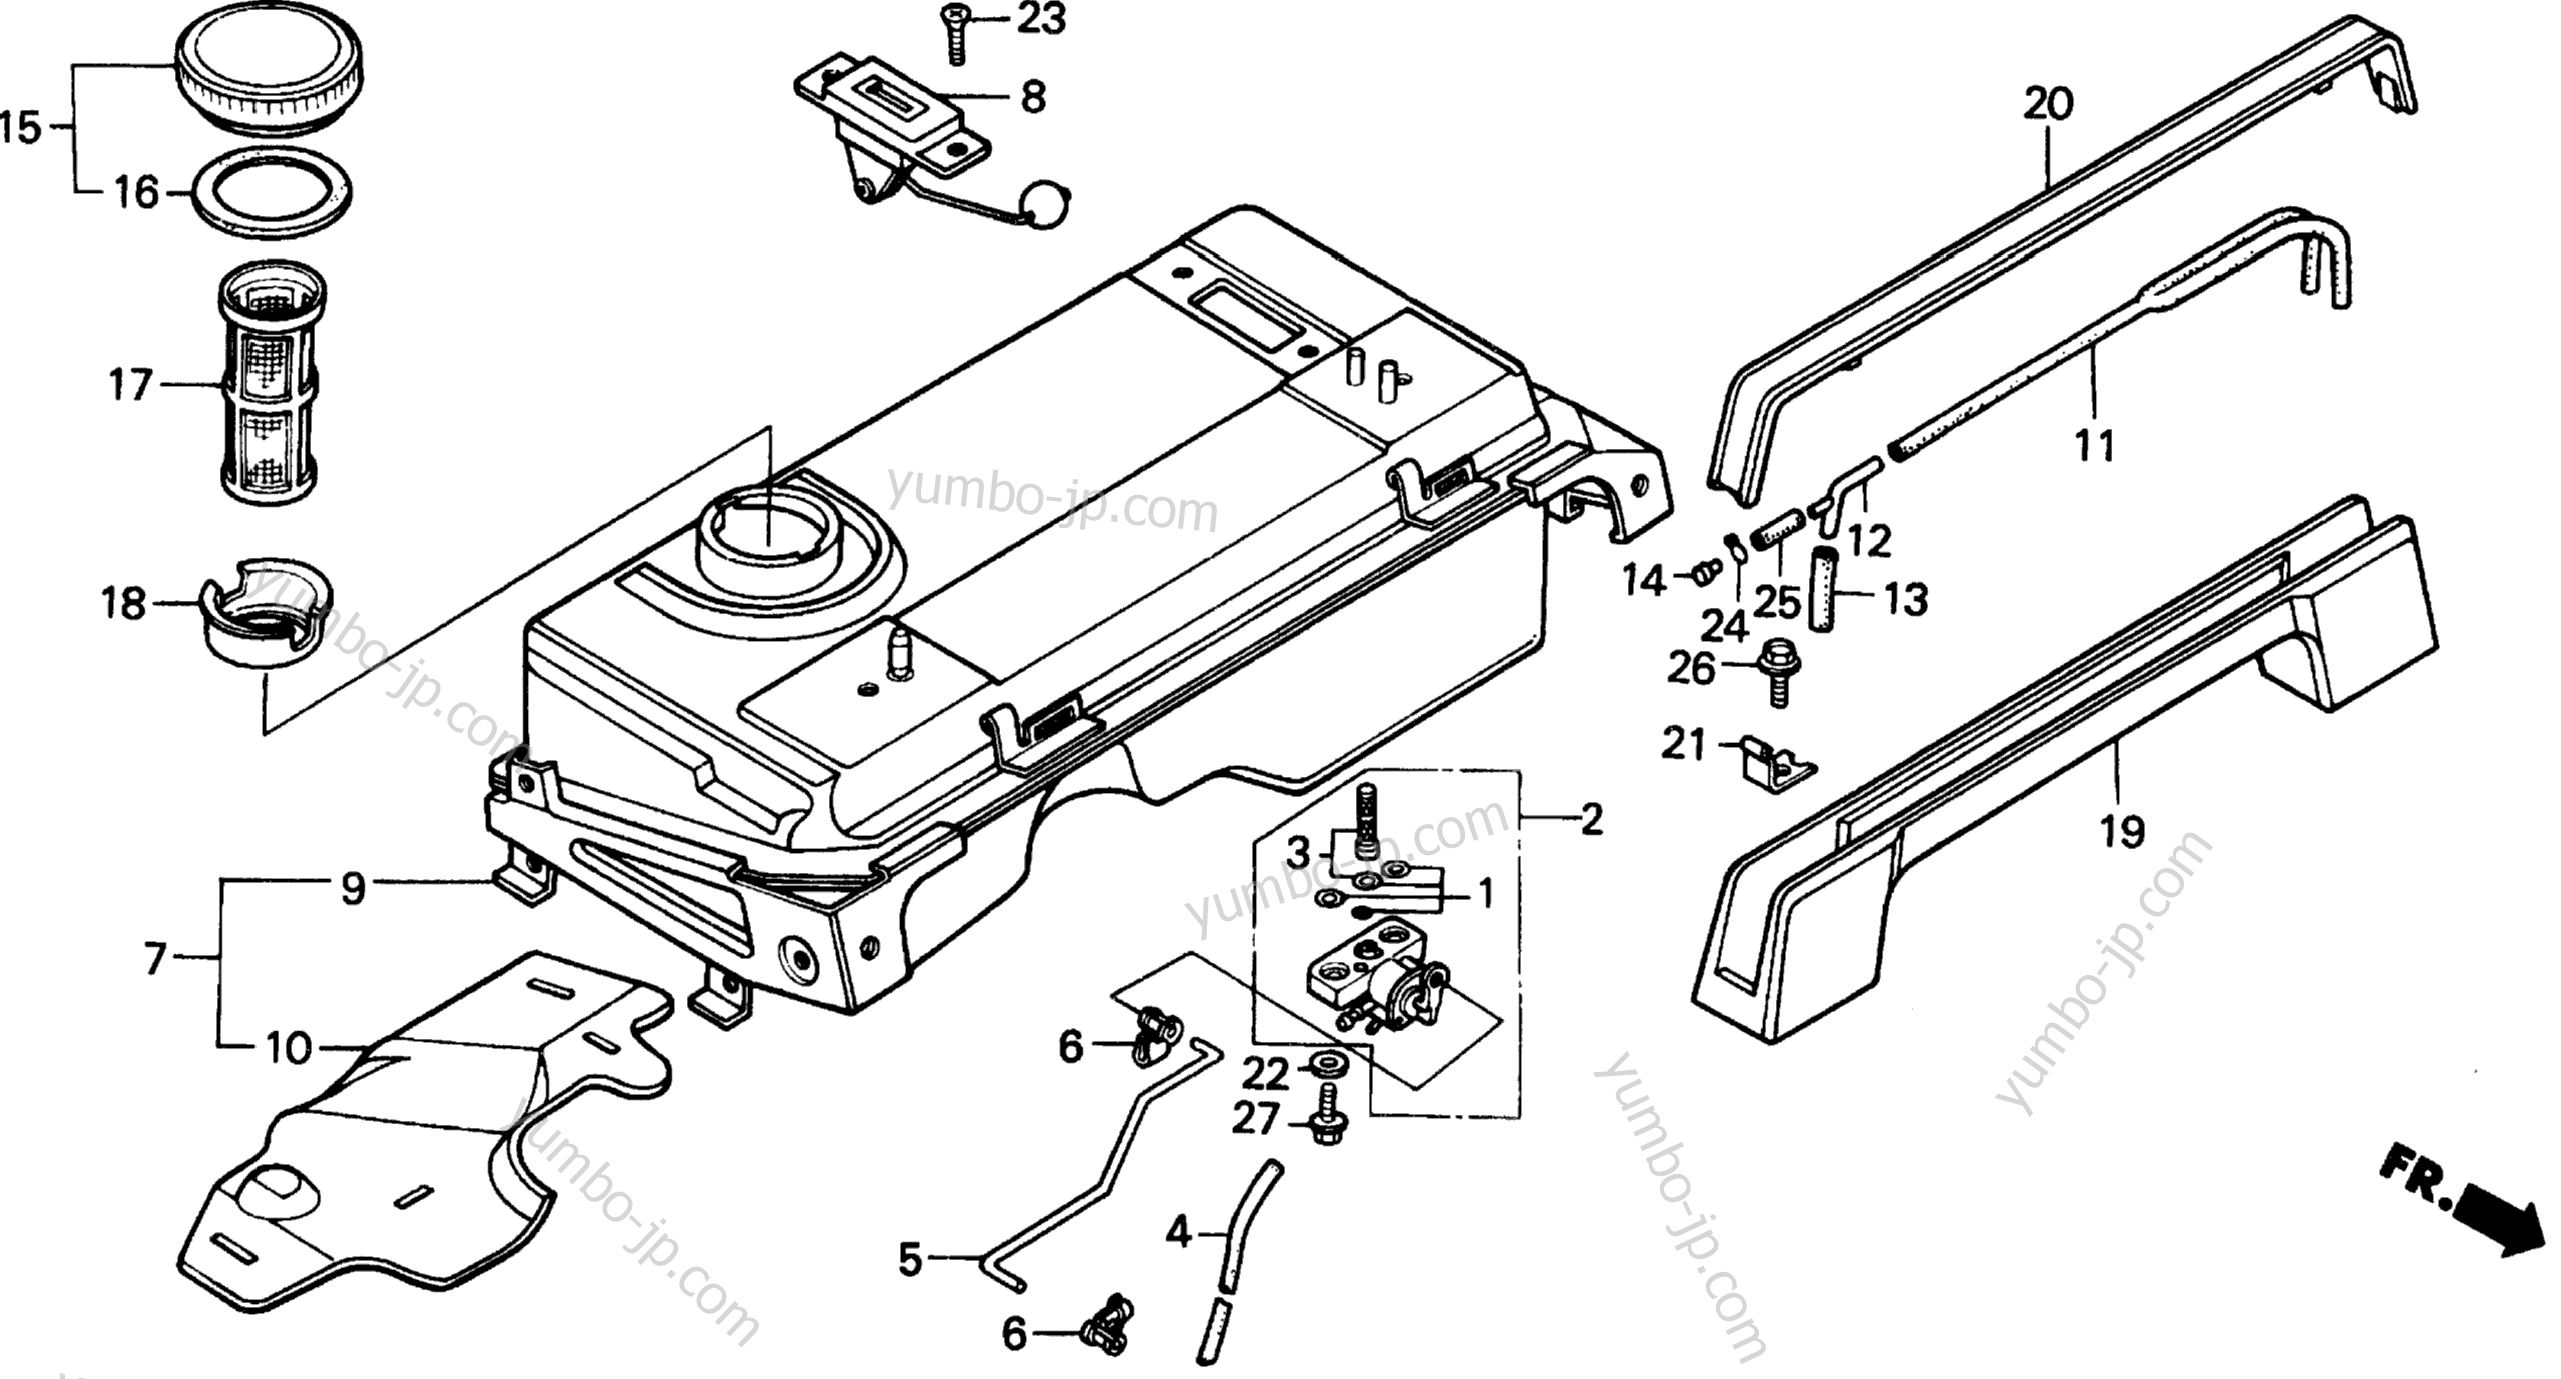 Yumbo Spare Parts Catalog For Generatora Honda Ex1000 A Fuel Tank Carrying Handle